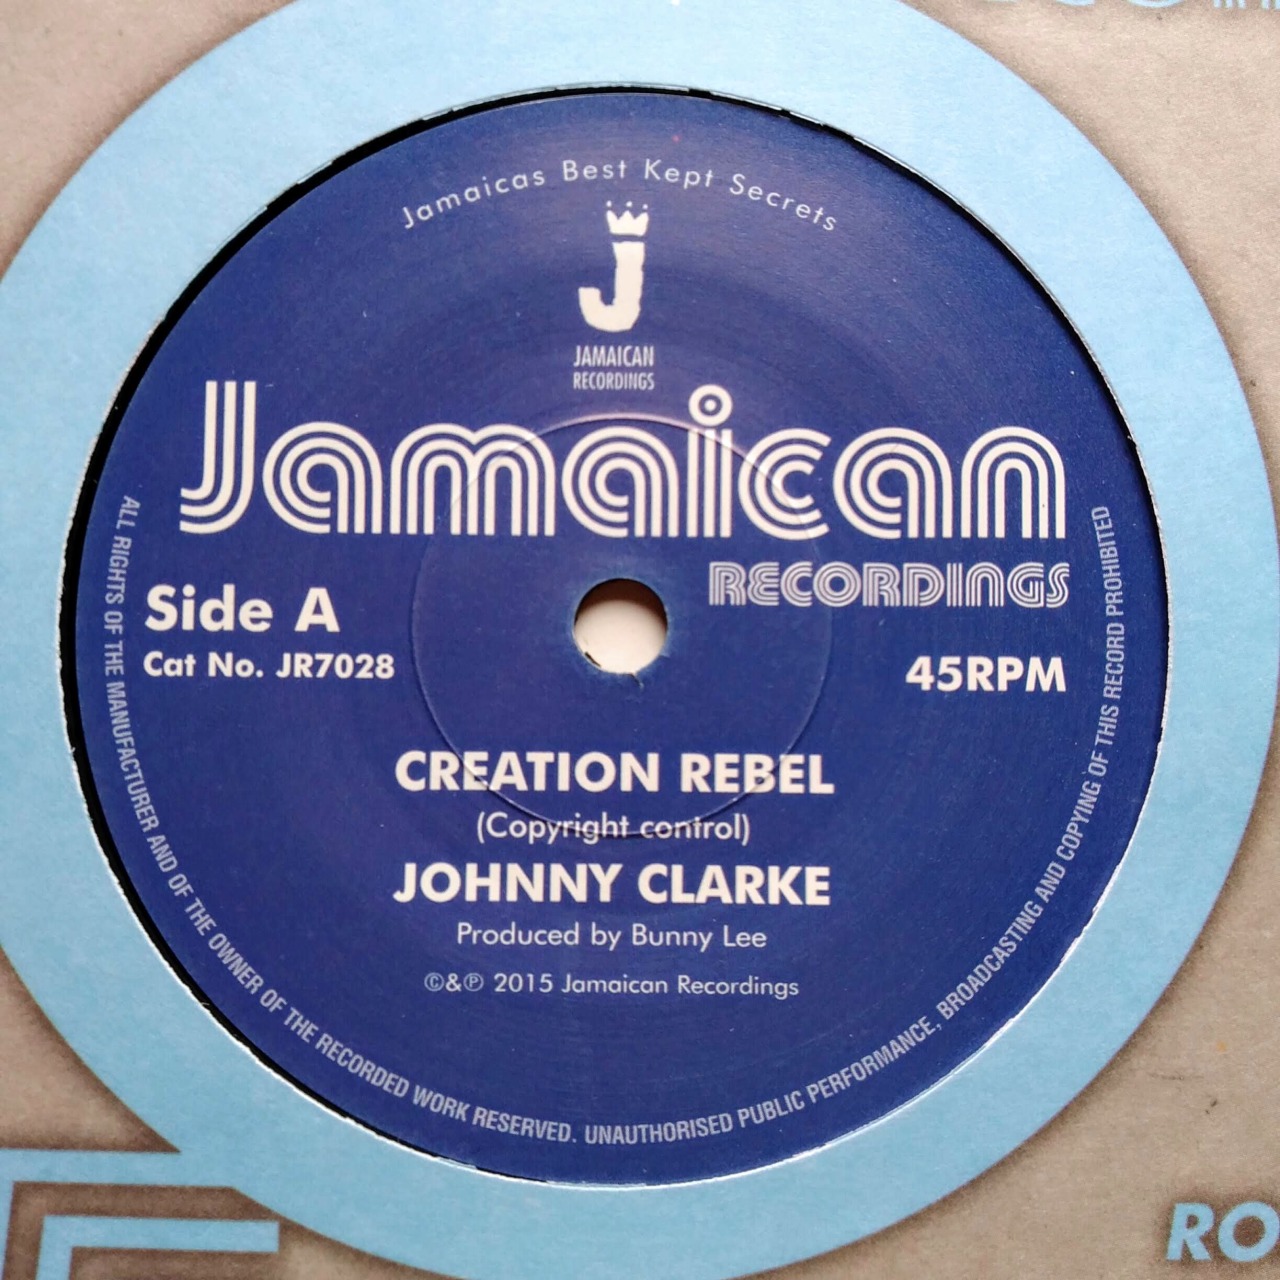 Johnny Clarke - Creation Rebel // 
Sello: Jamaican Recordings - JR7028 // 
7 inch - Vinilo // UK / 45 RPM / 2015 // 
============== 
A - Creation Rebel // 
B - Creation Rebel (Version) // 
===========
Vinilo: Nuevo - No está Precintado //
===========
10€
=========== #7#45#reggae#1970s#johnny clarke#jamaican recordings